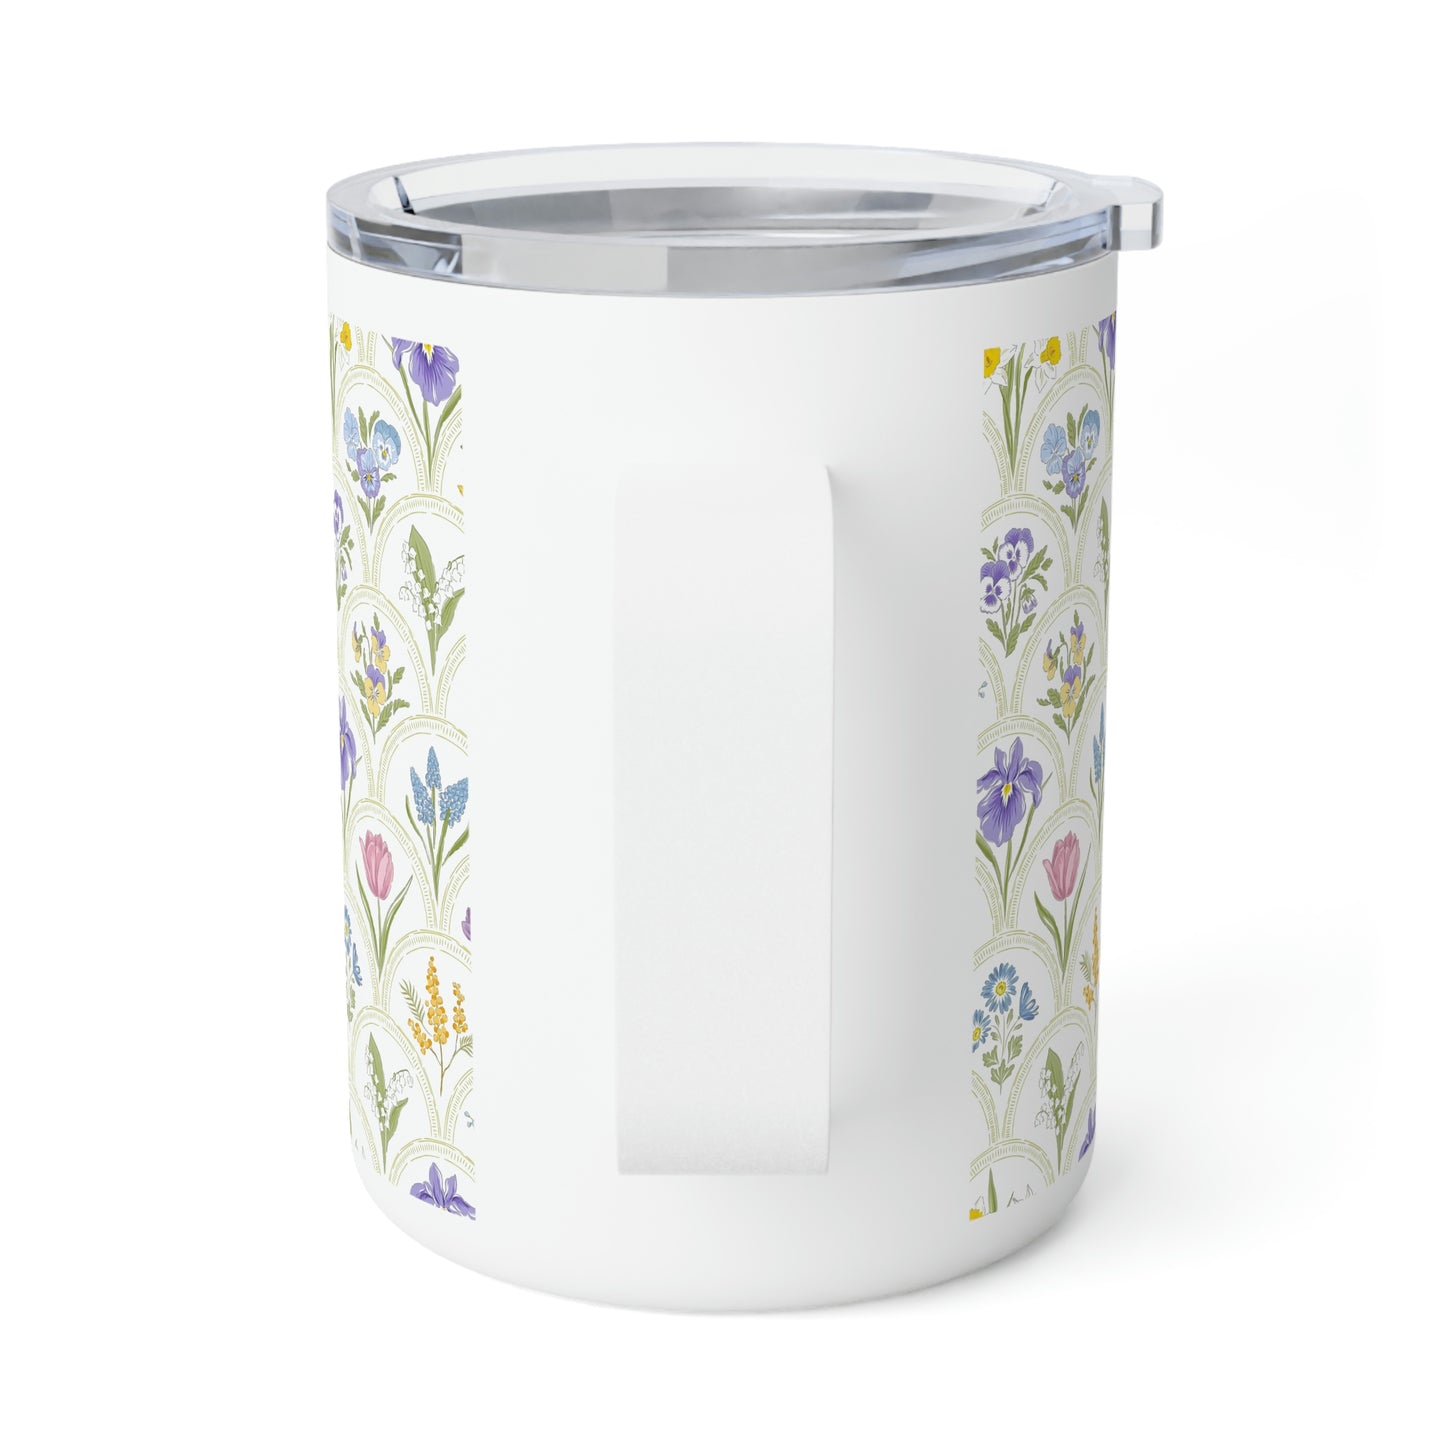 Spring Garden Insulated Coffee Mug, 10oz